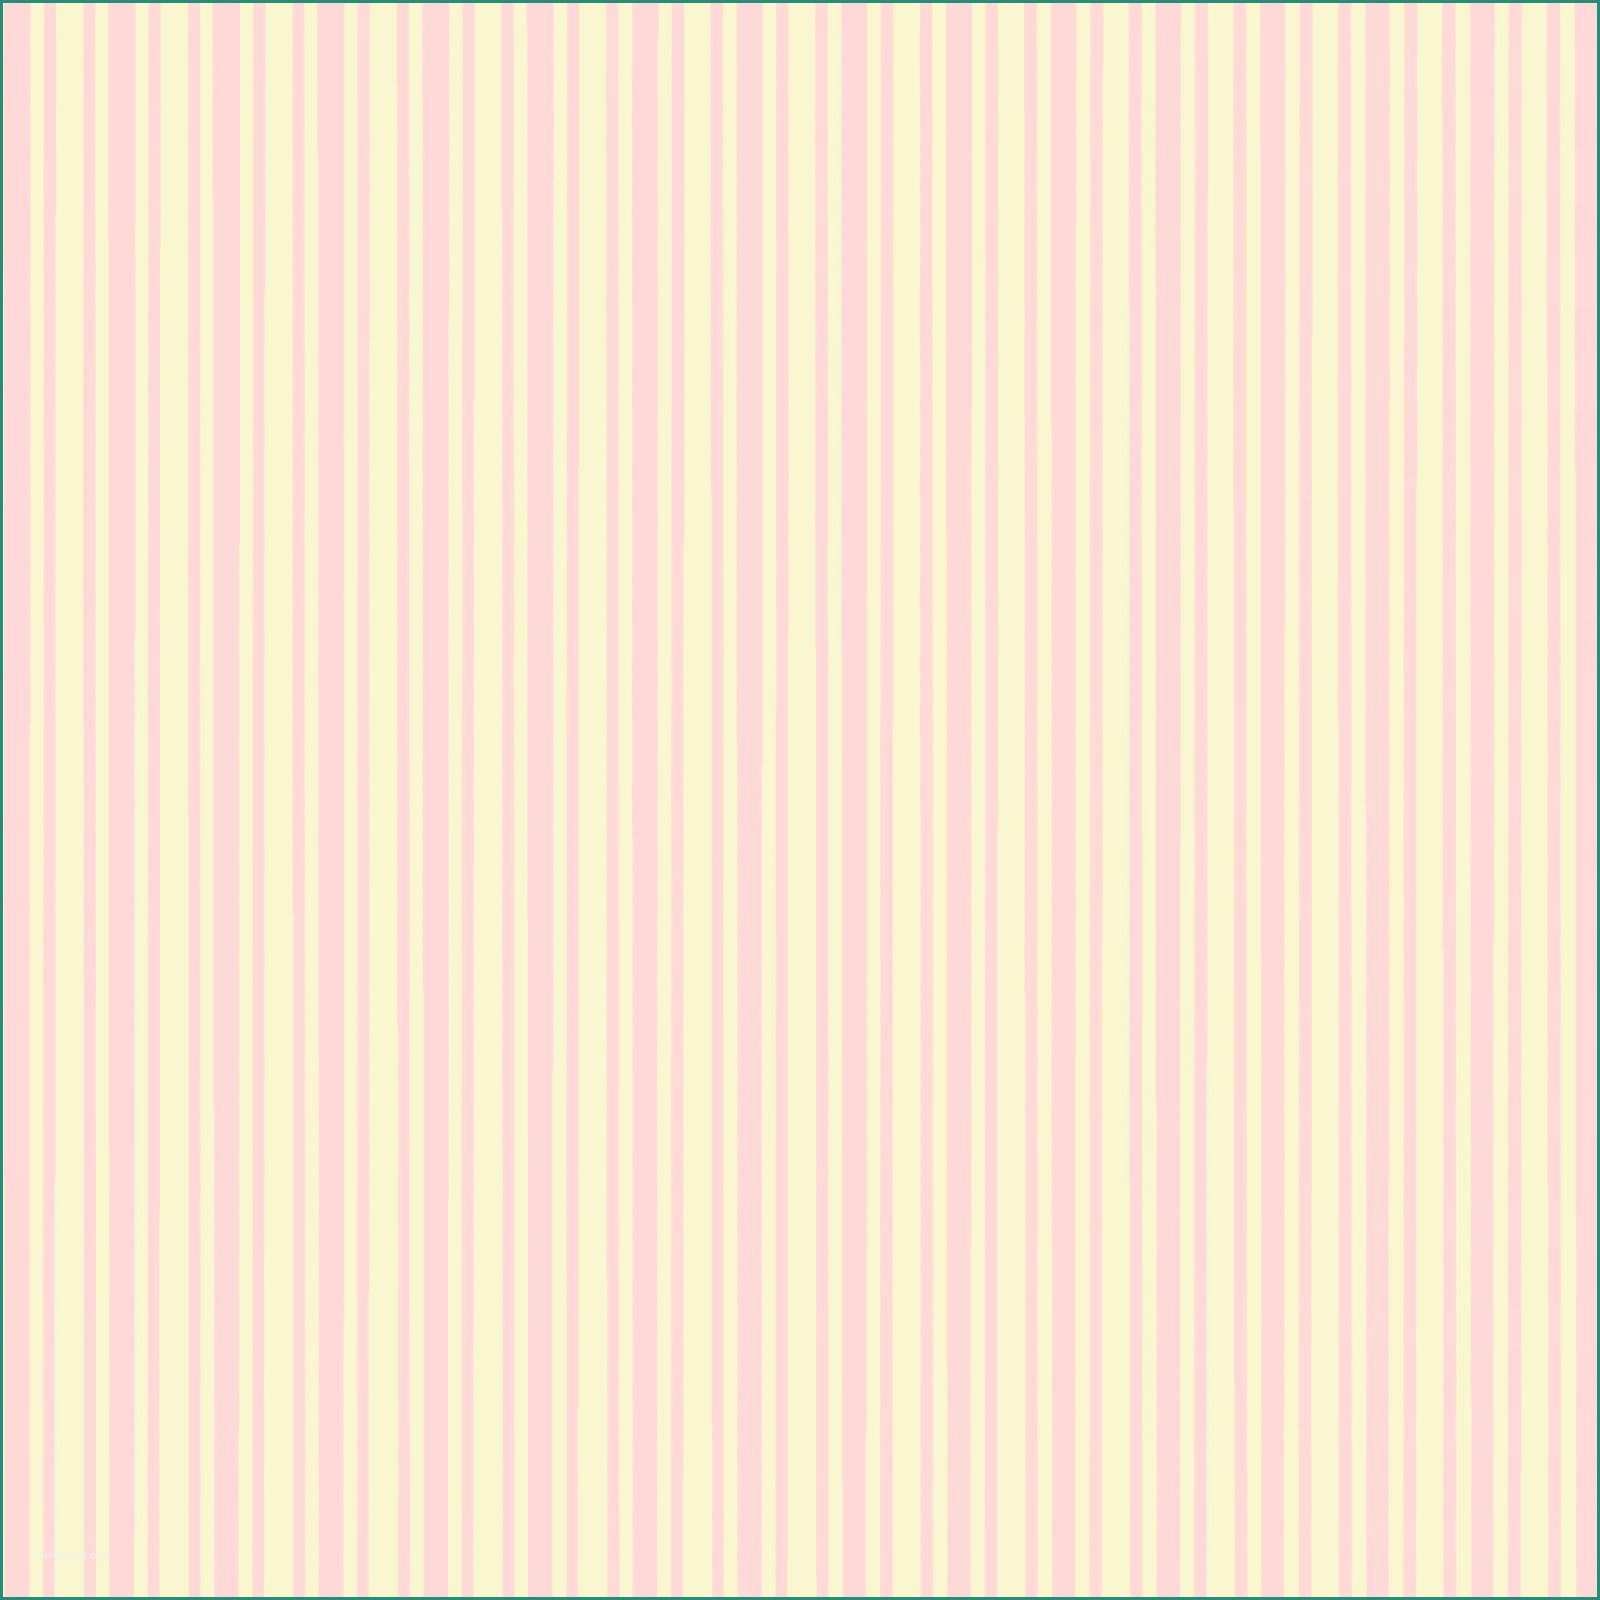 Quarzite Bianca Brillantinata E Pink and Cream Ticking Stripes Digital Scrapbook Paper